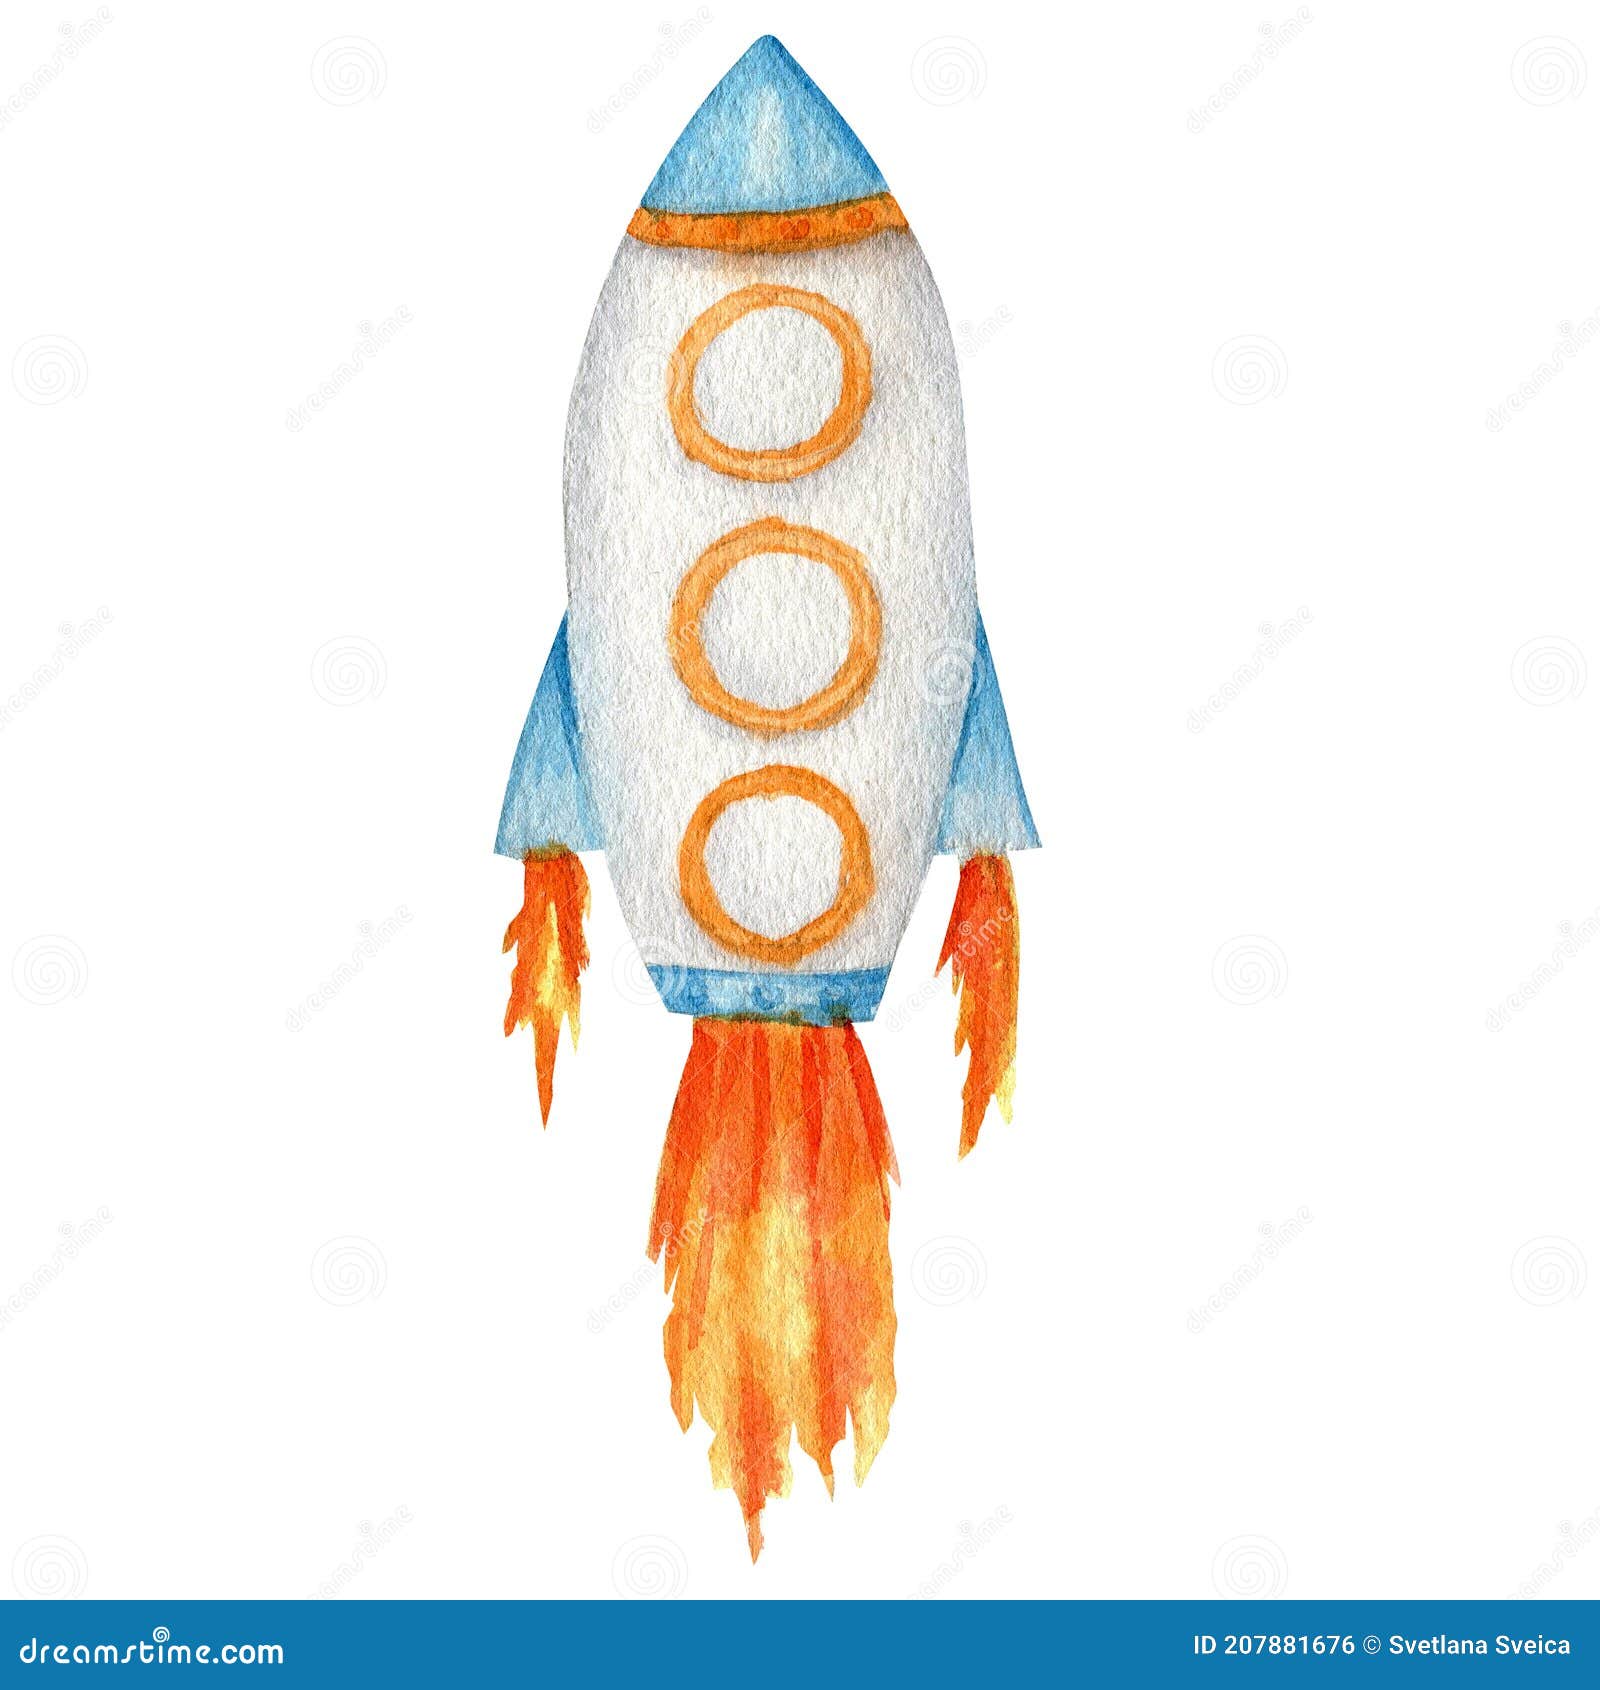 916 Cartoon Rocket Ship Stock Photos - Free & Royalty-Free Stock Photos  from Dreamstime